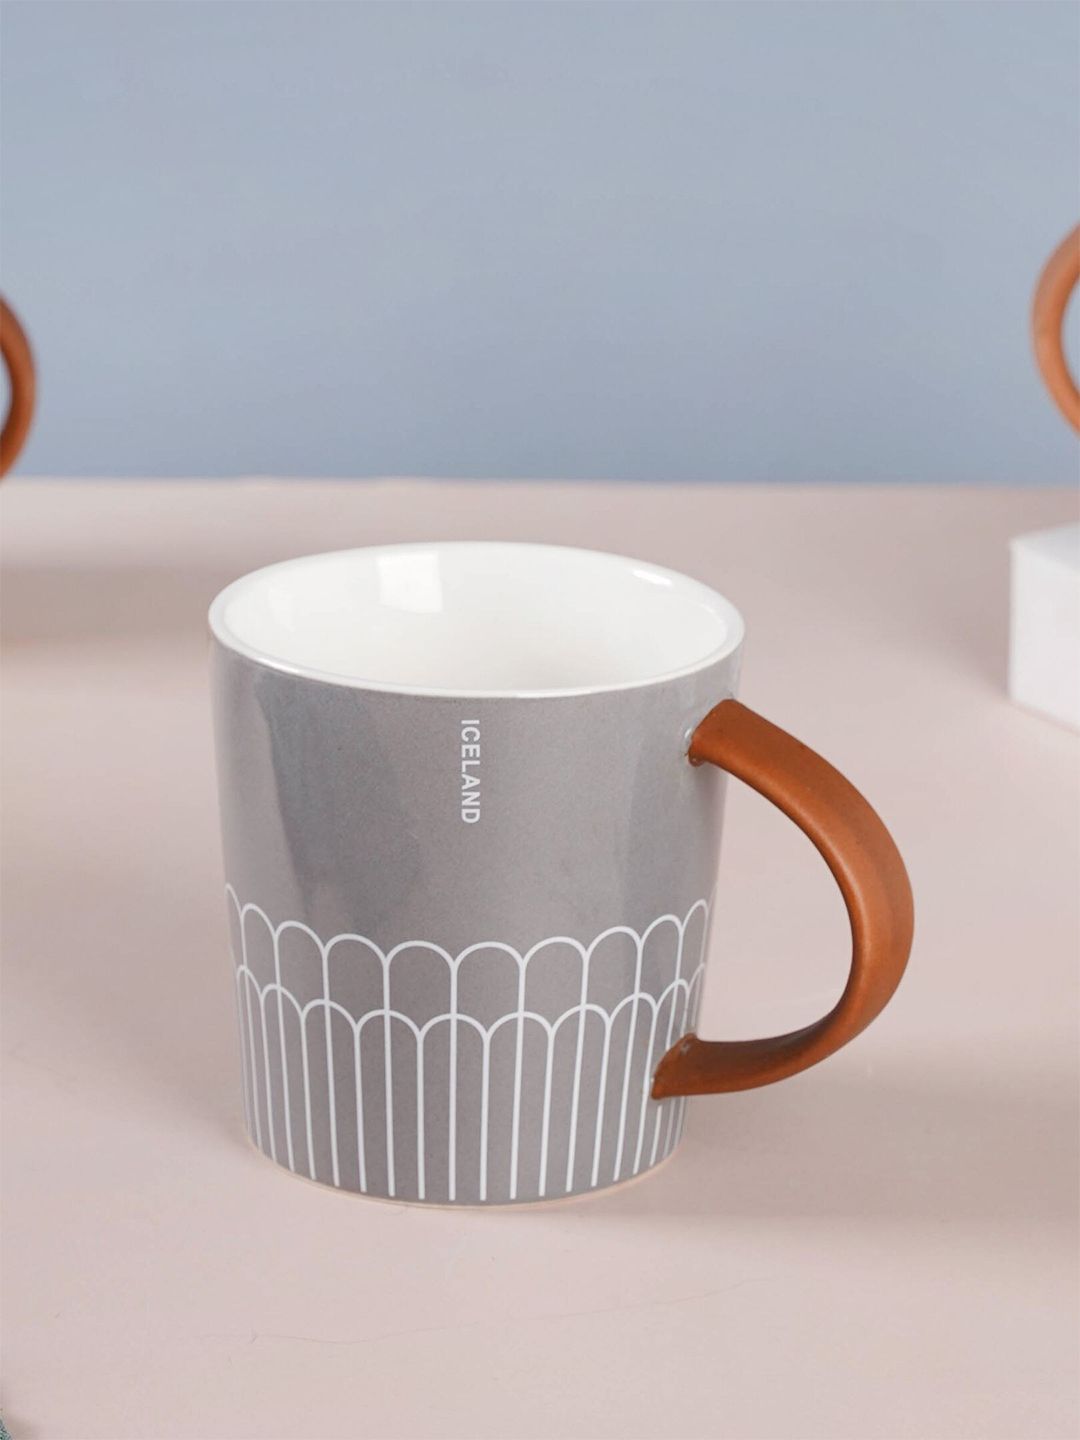 Nestasia Grey & Brown Geometric Printed Ceramic Mug For Tea Price in India